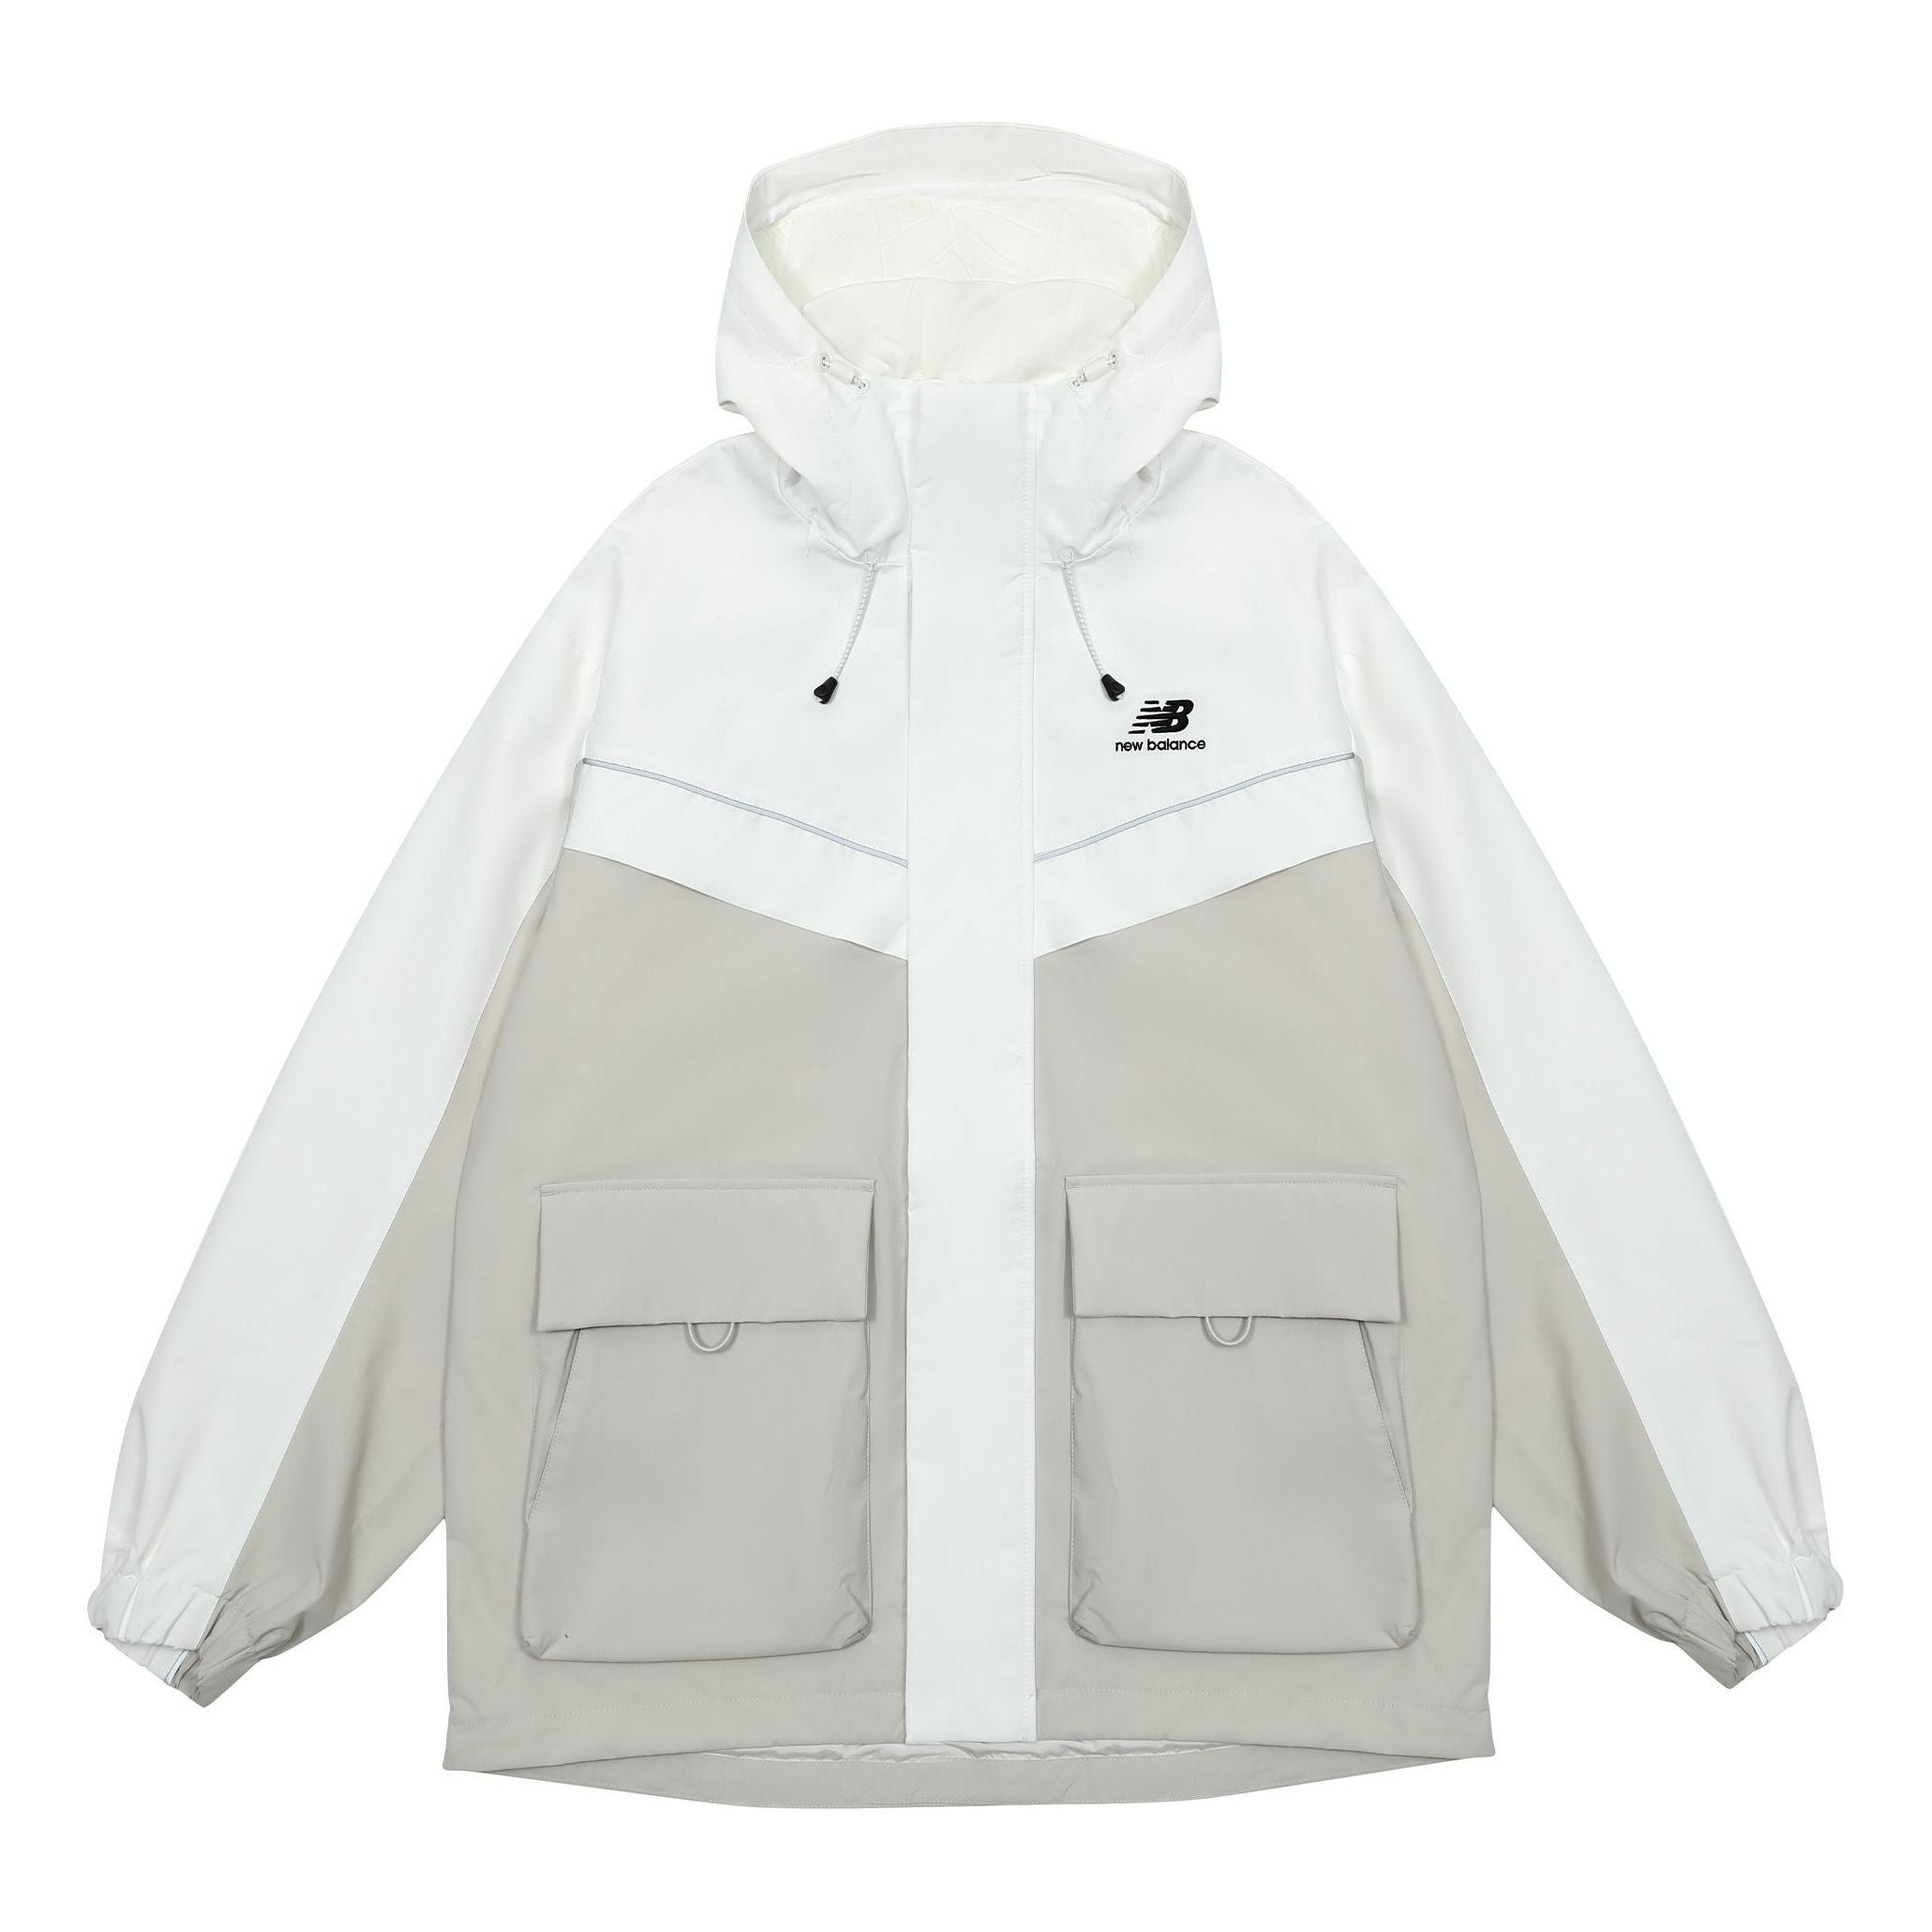 New Balance Windproof Jacket 'White Grey' 5AC39333-LBE - 1